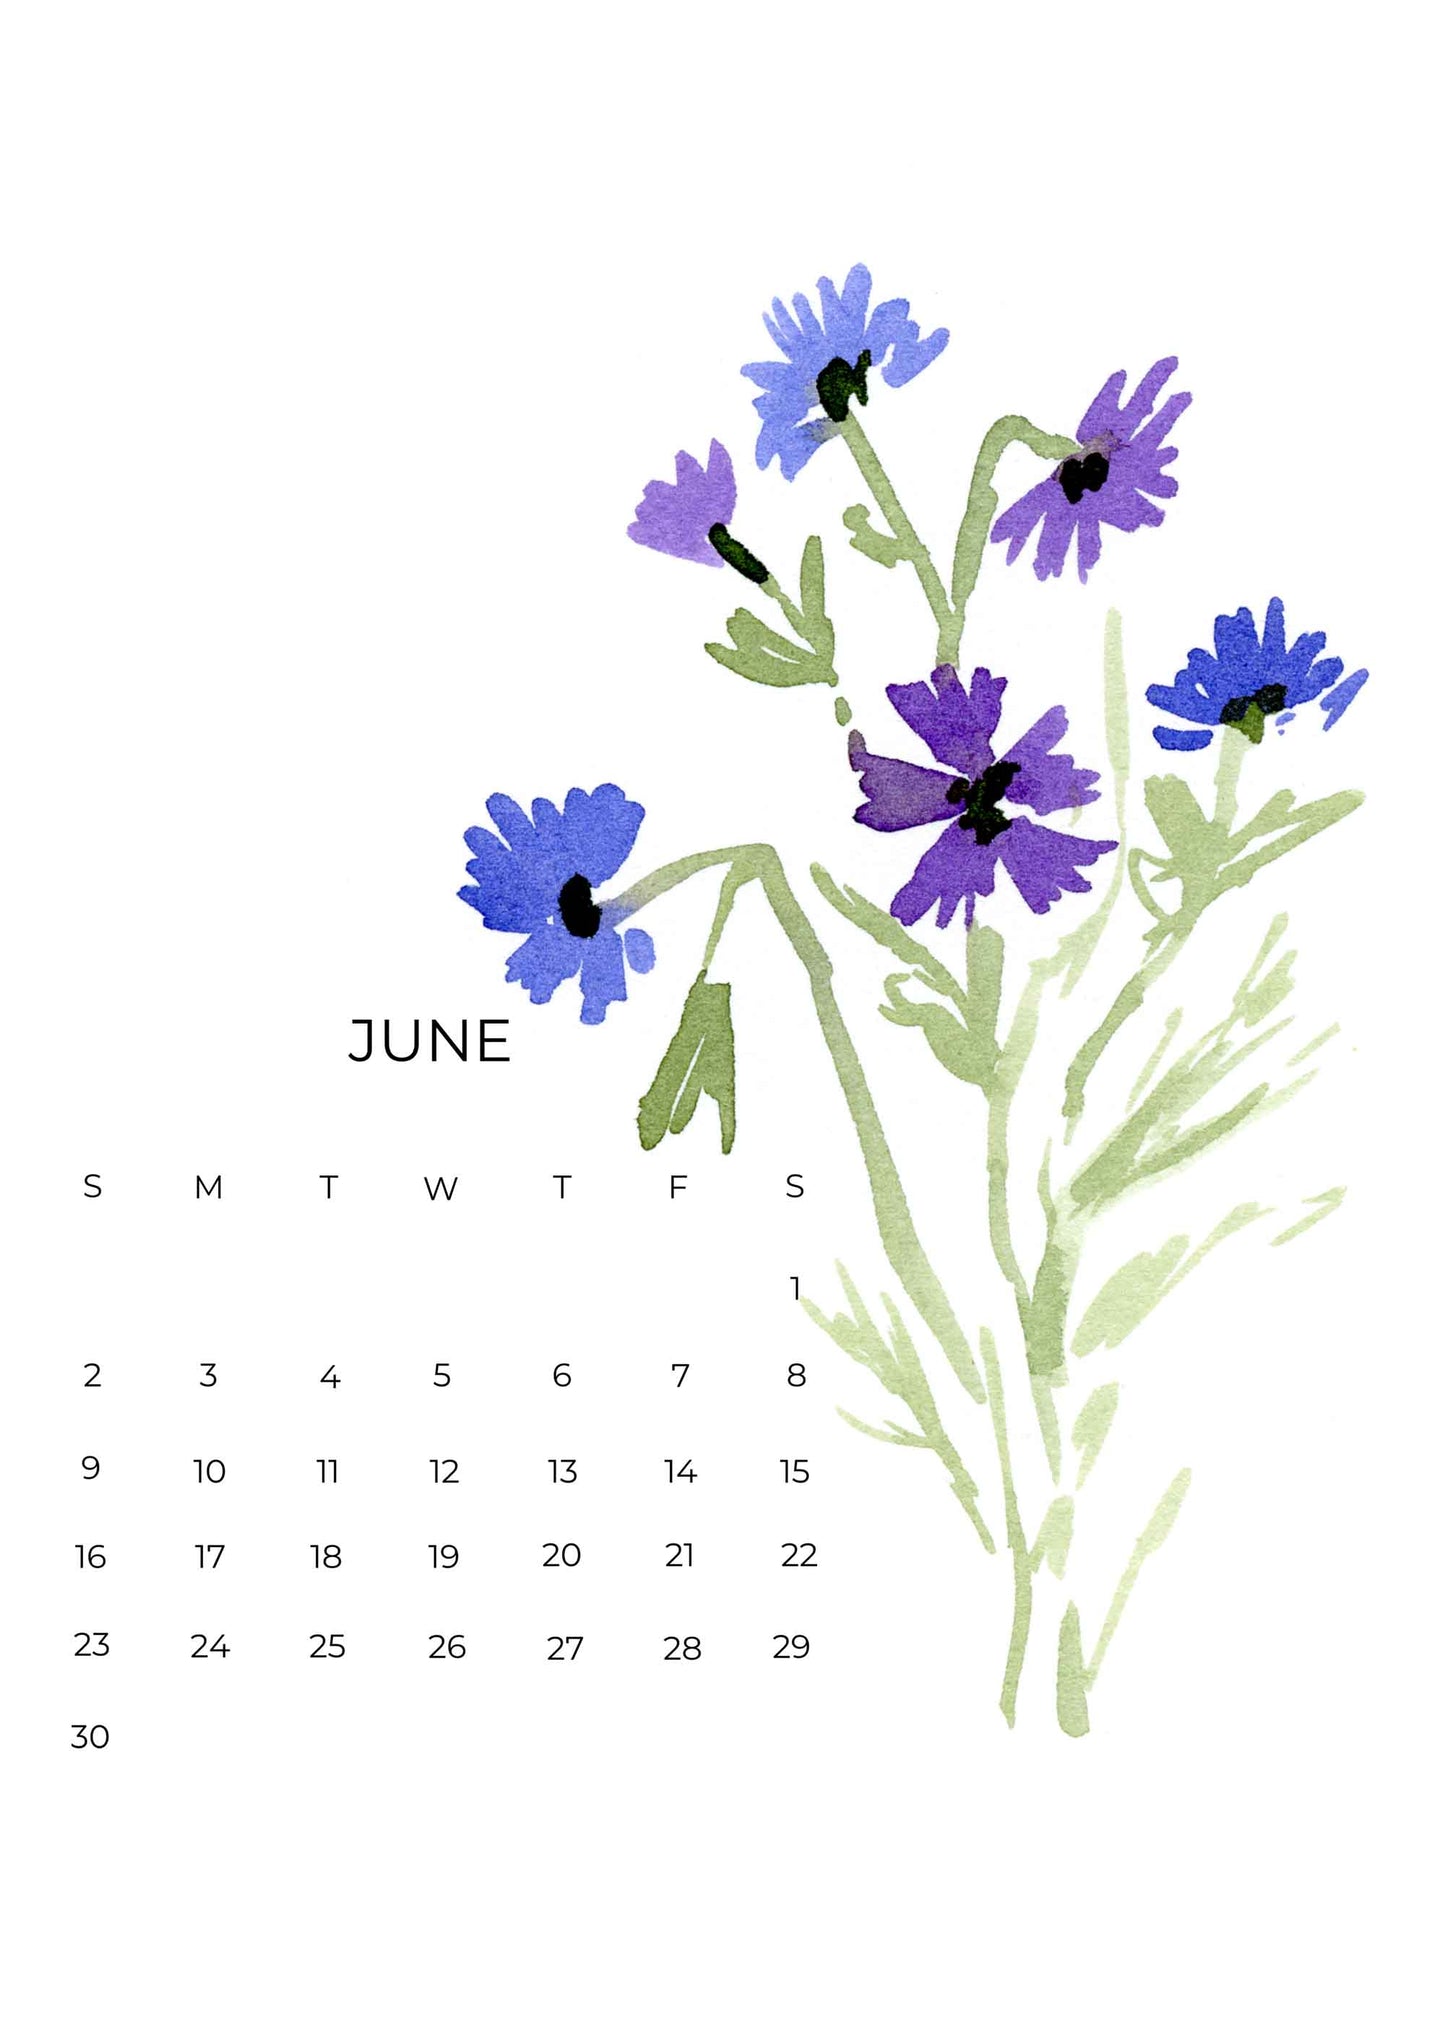 2024 Watercolor Calendar